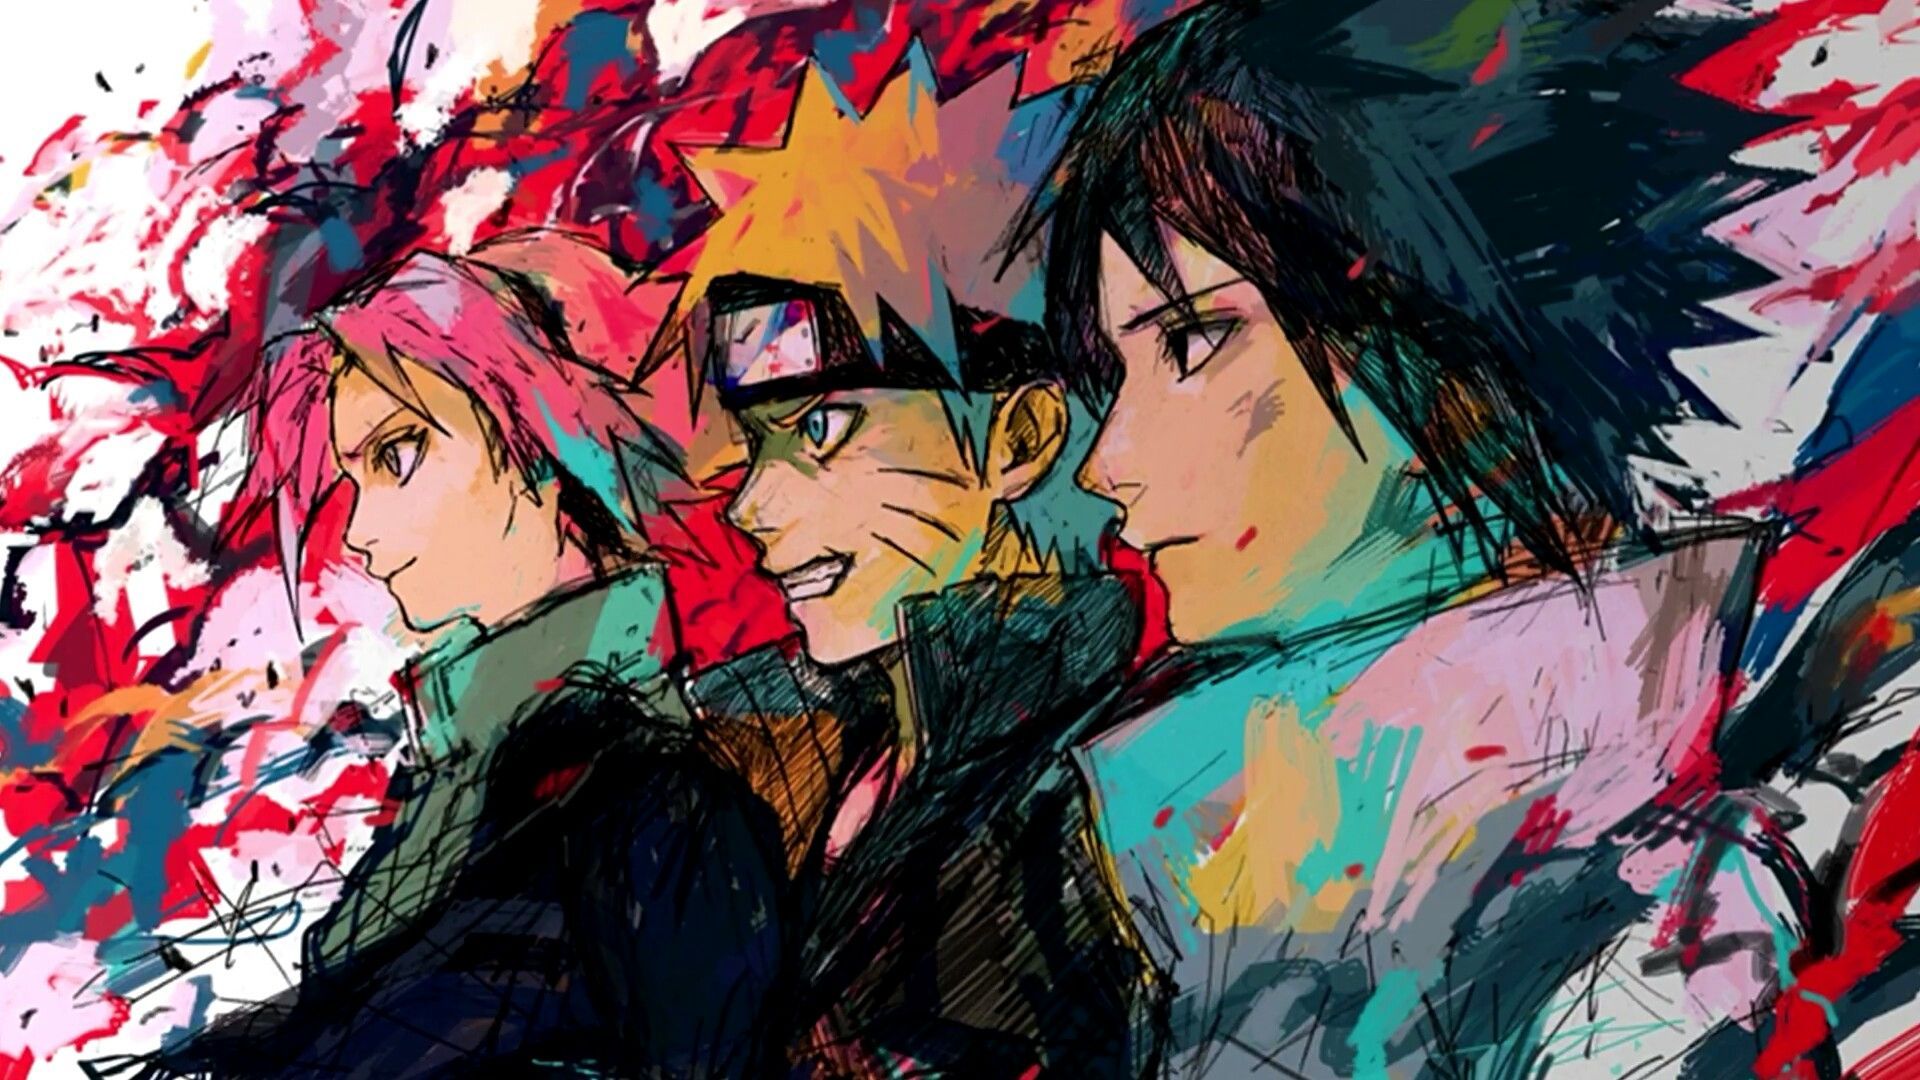 Naruto Art Wallpaper Android क लए APK डउनलड कर